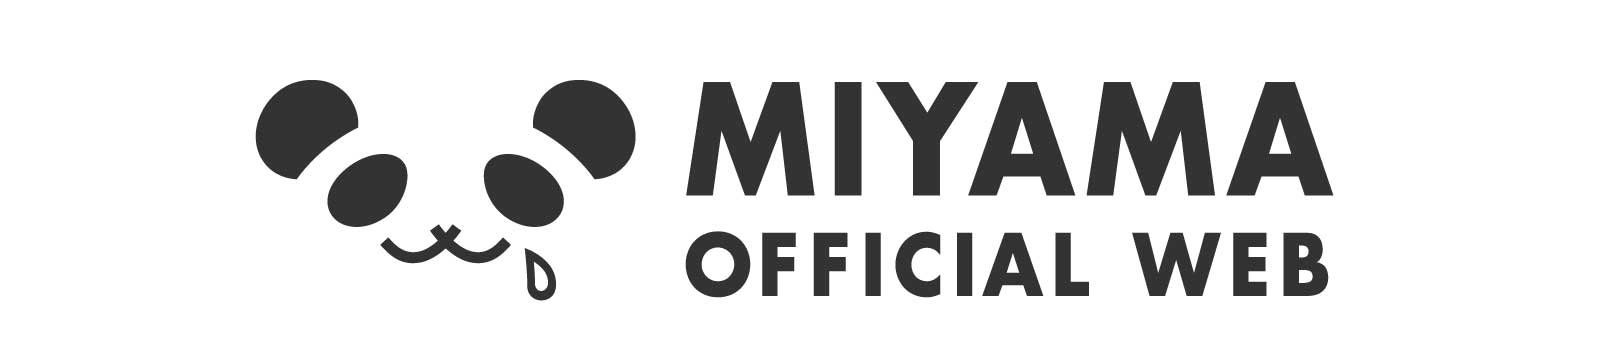 MIYAMA OFFICIAL WEB